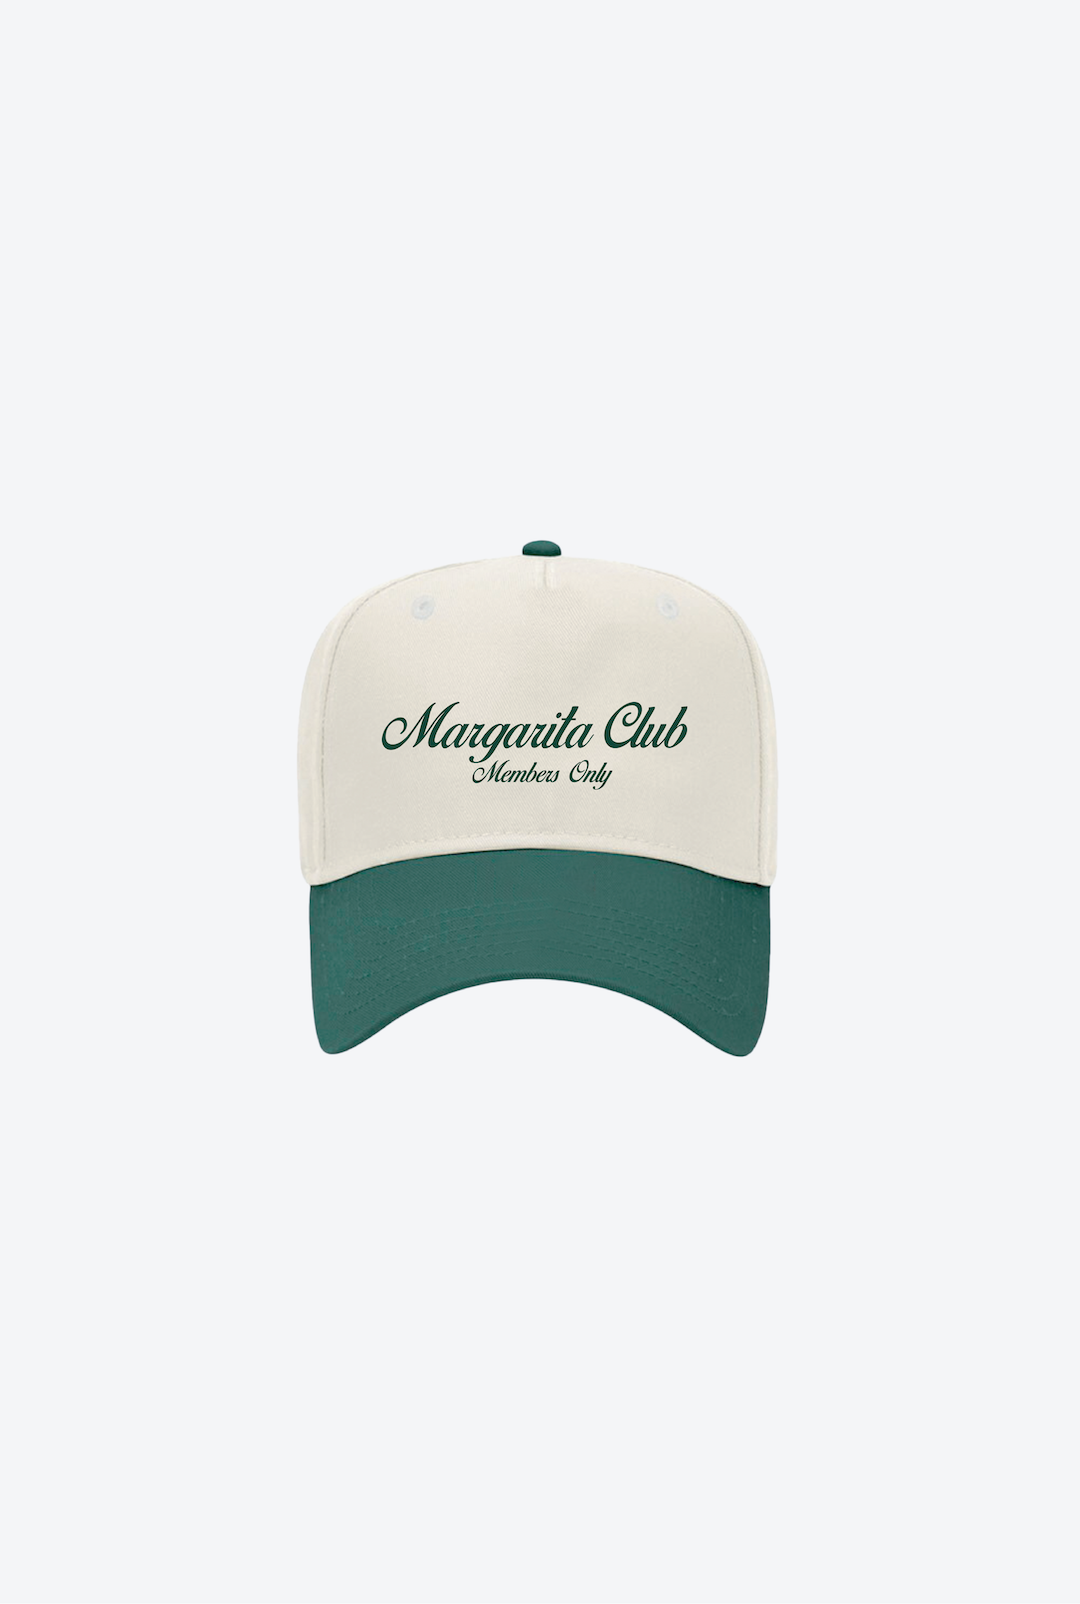 Margarita Club  A-Frame Cap - Forest Green/Ivory